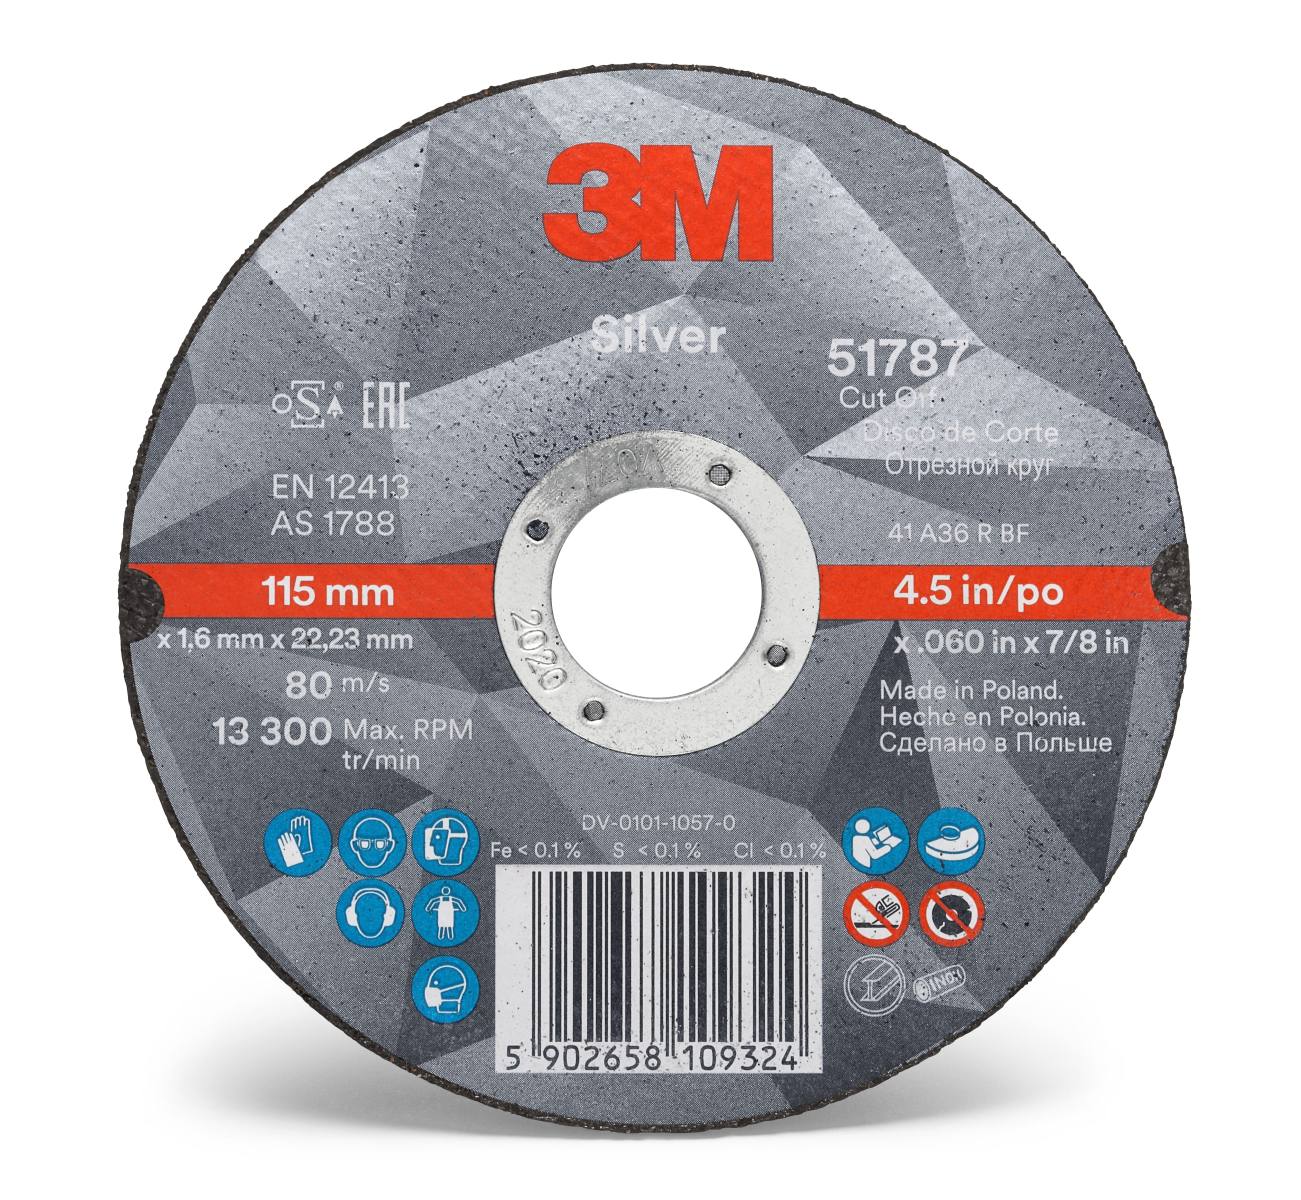 Disco de corte 3M Silver Cut-Off, 105 mm, 1,0 mm, 10 mm, T41, 51777